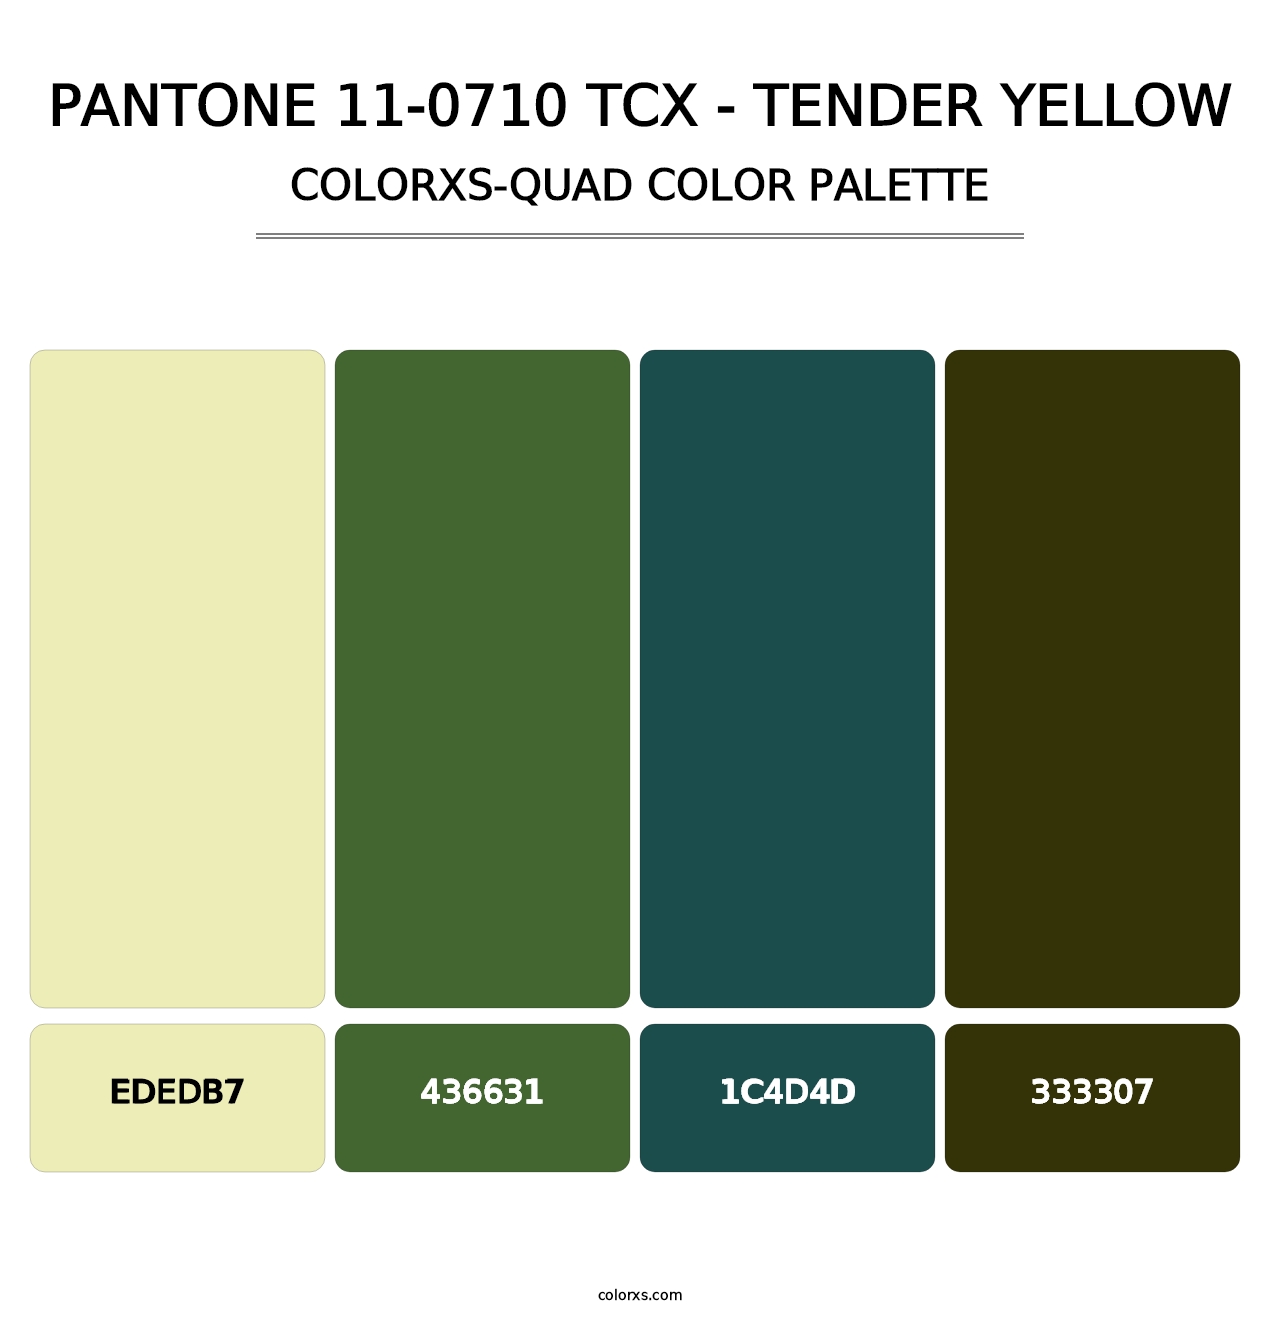 PANTONE 11-0710 TCX - Tender Yellow - Colorxs Quad Palette